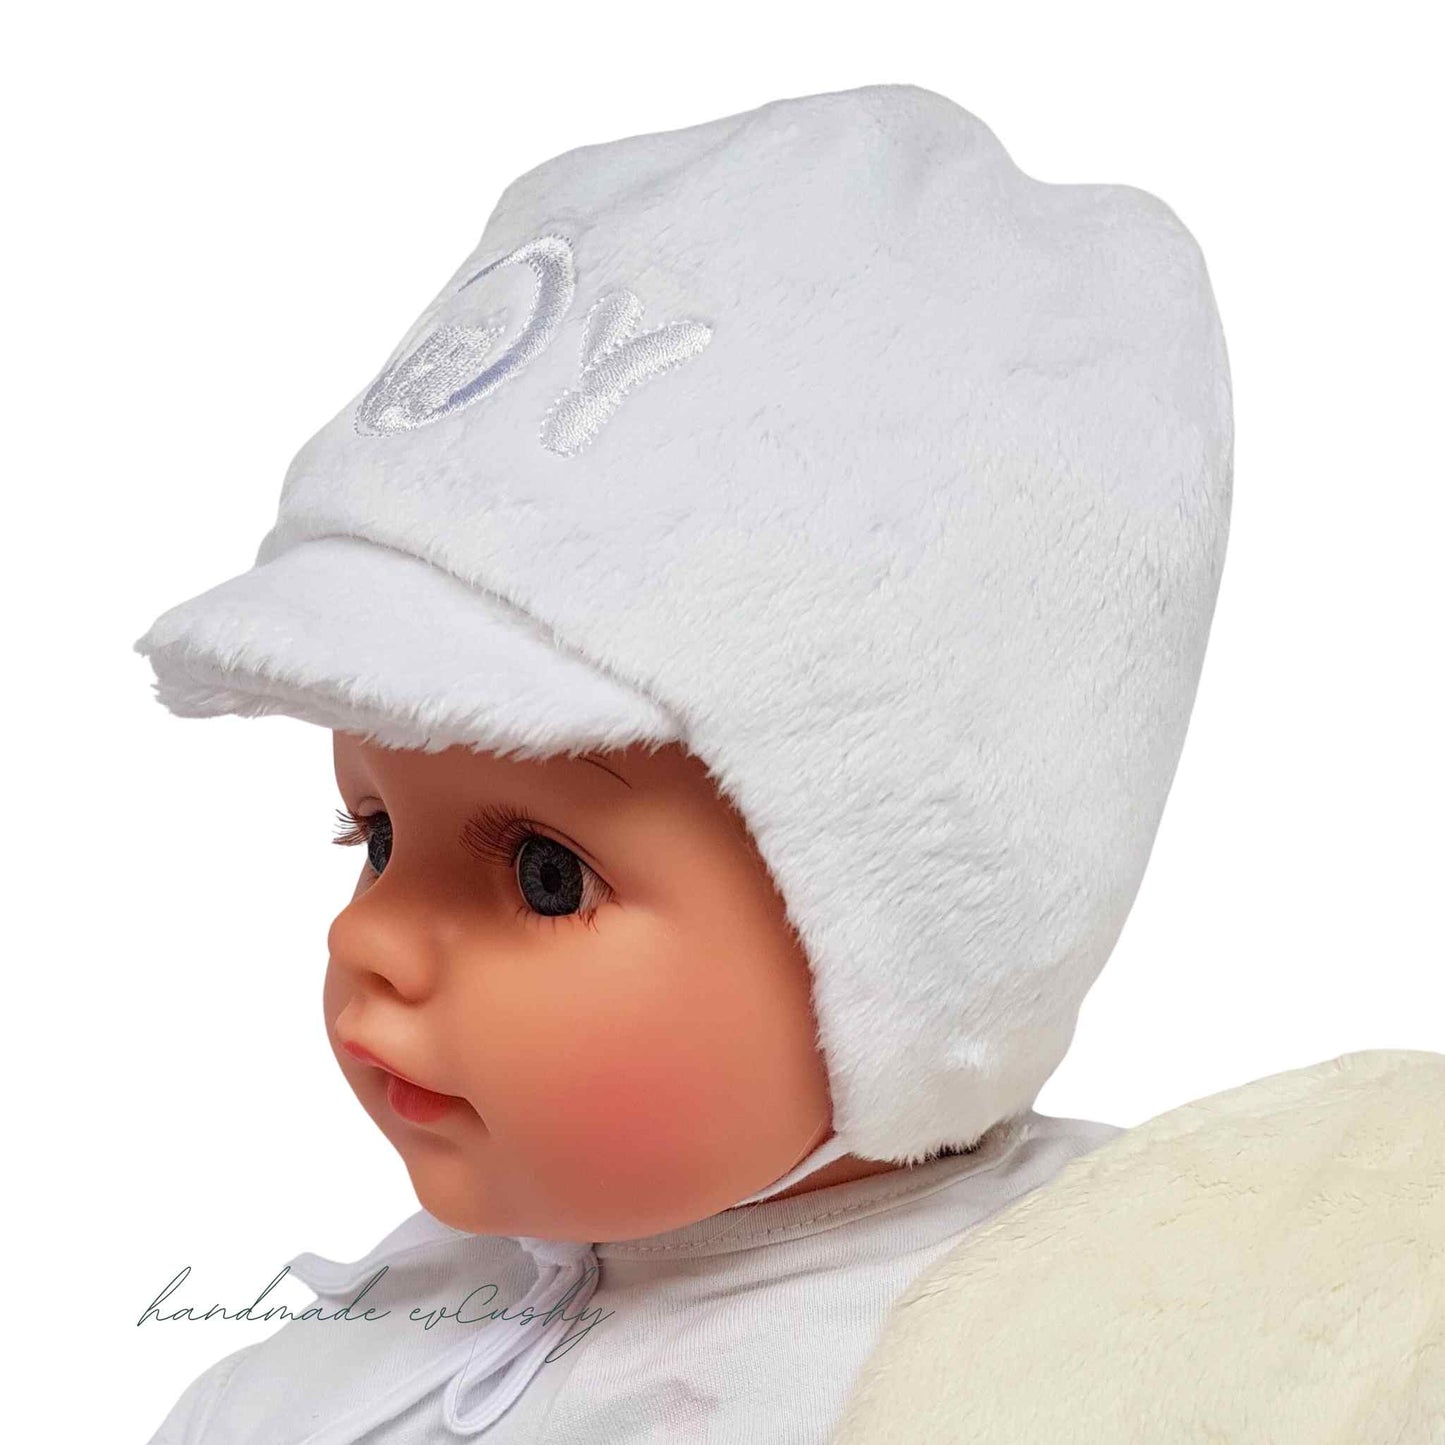 evcushy winter hat for baby boy white fleece hat with beak